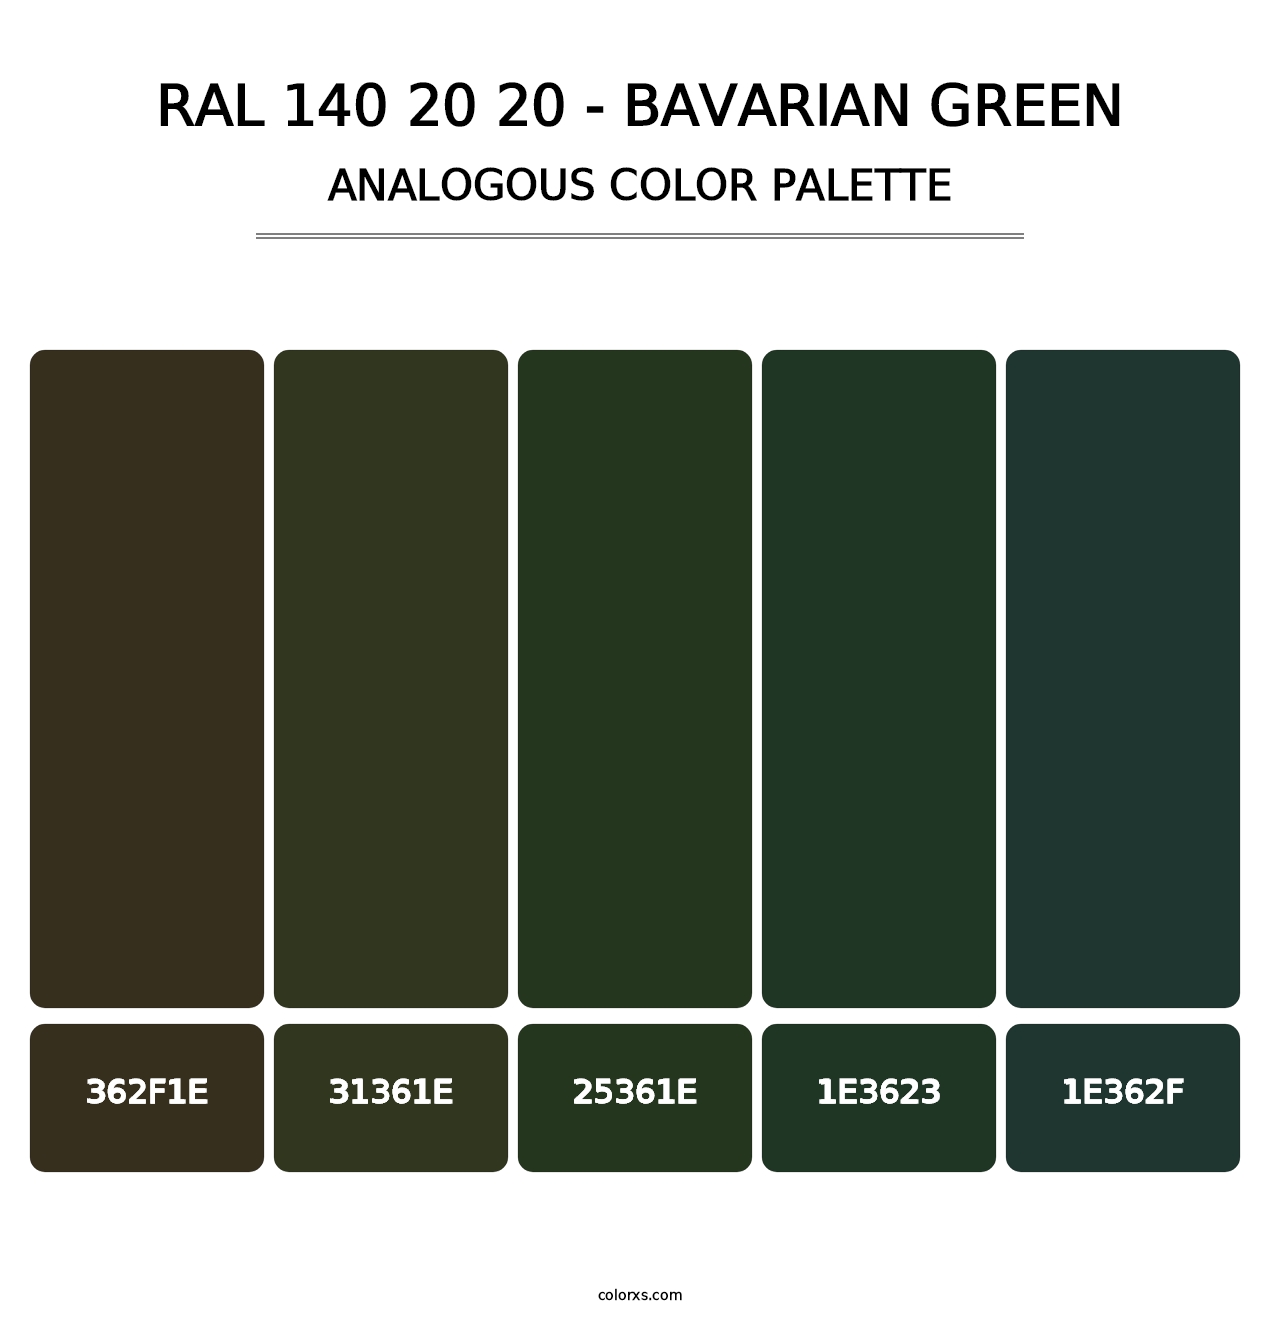 RAL 140 20 20 - Bavarian Green - Analogous Color Palette